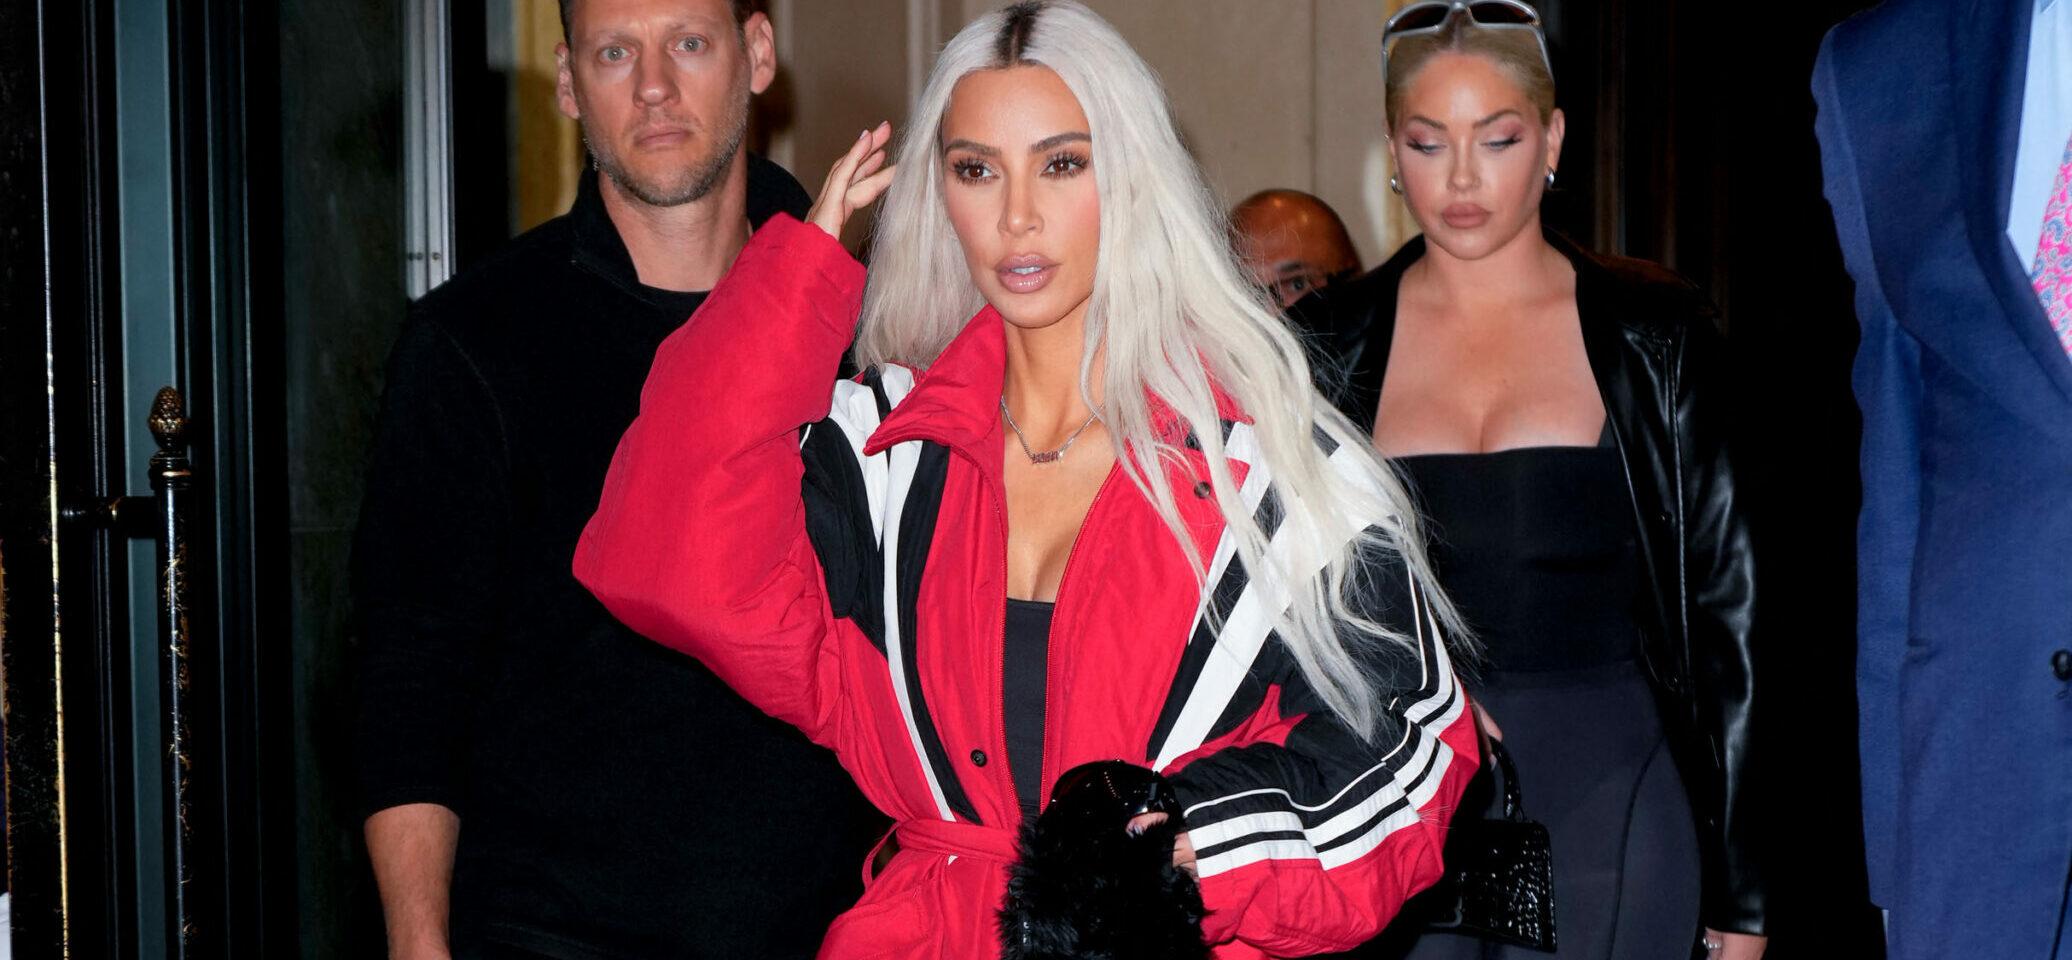 Kim Kardashian Files Restraining Order Against Gun-wielding ‘Stalker’